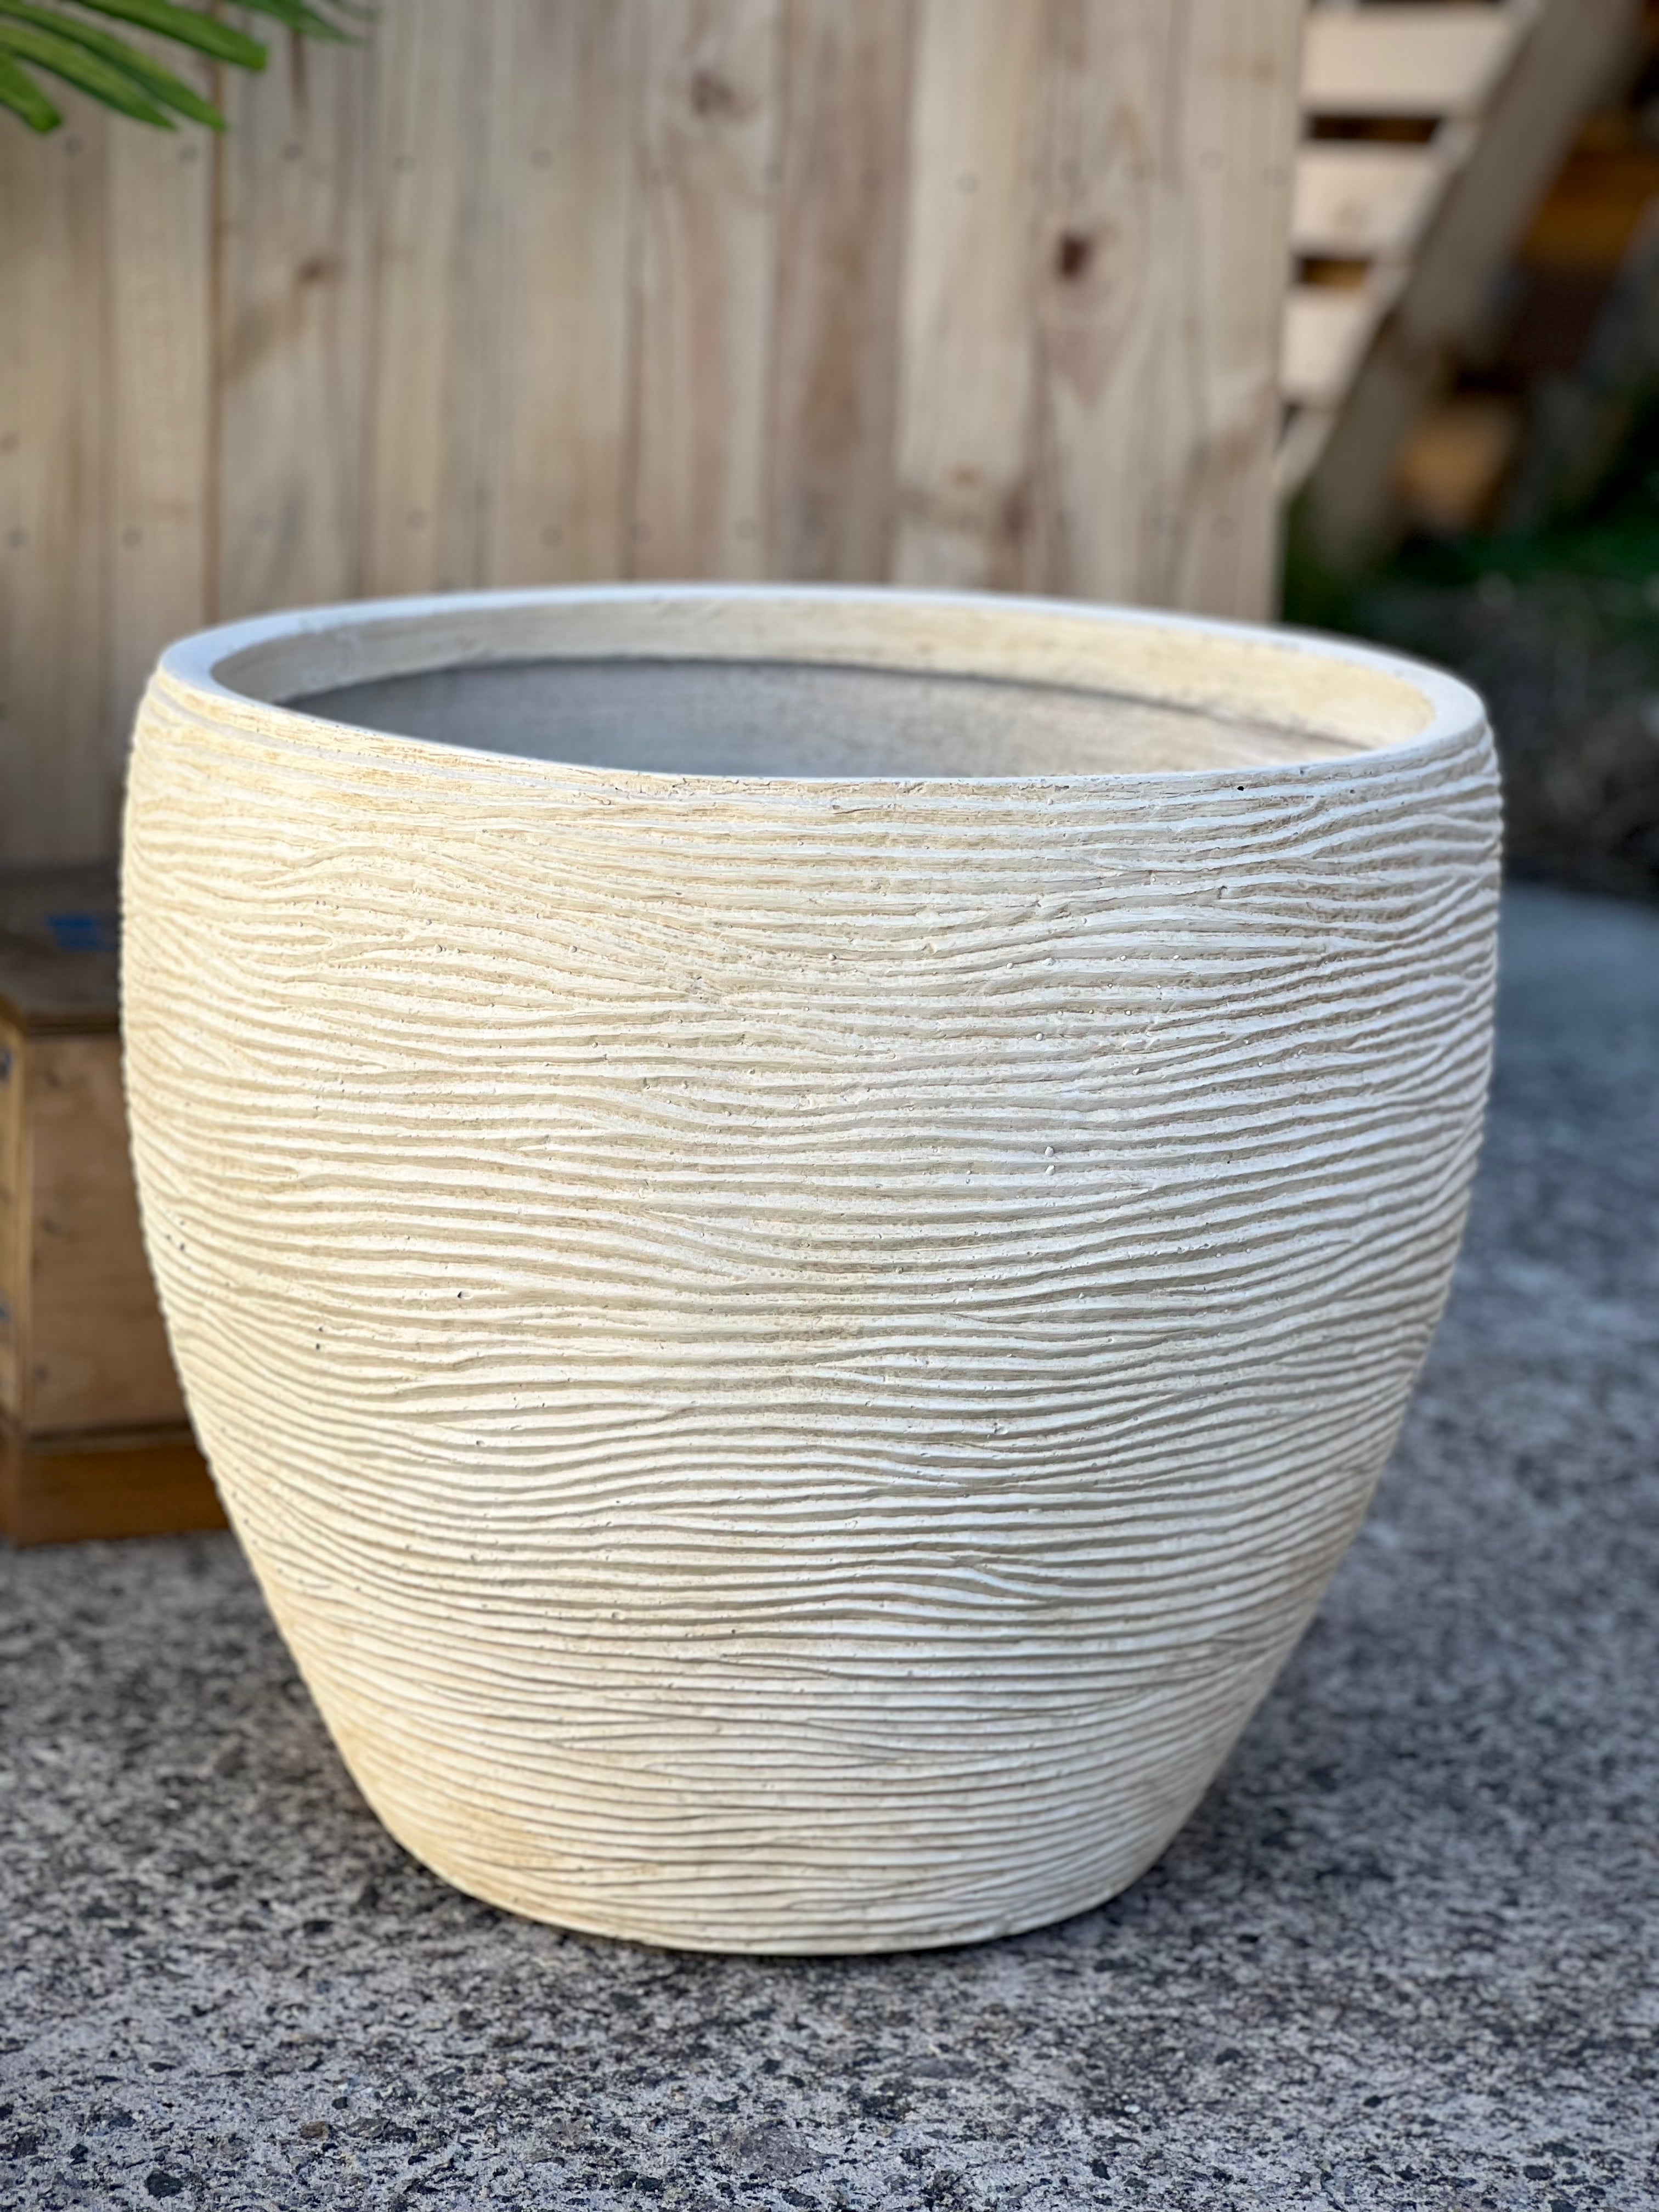 DESERT ROSE - Indoor or Outdoor Fiberclay Lightweight Pot with a Wavy Texture